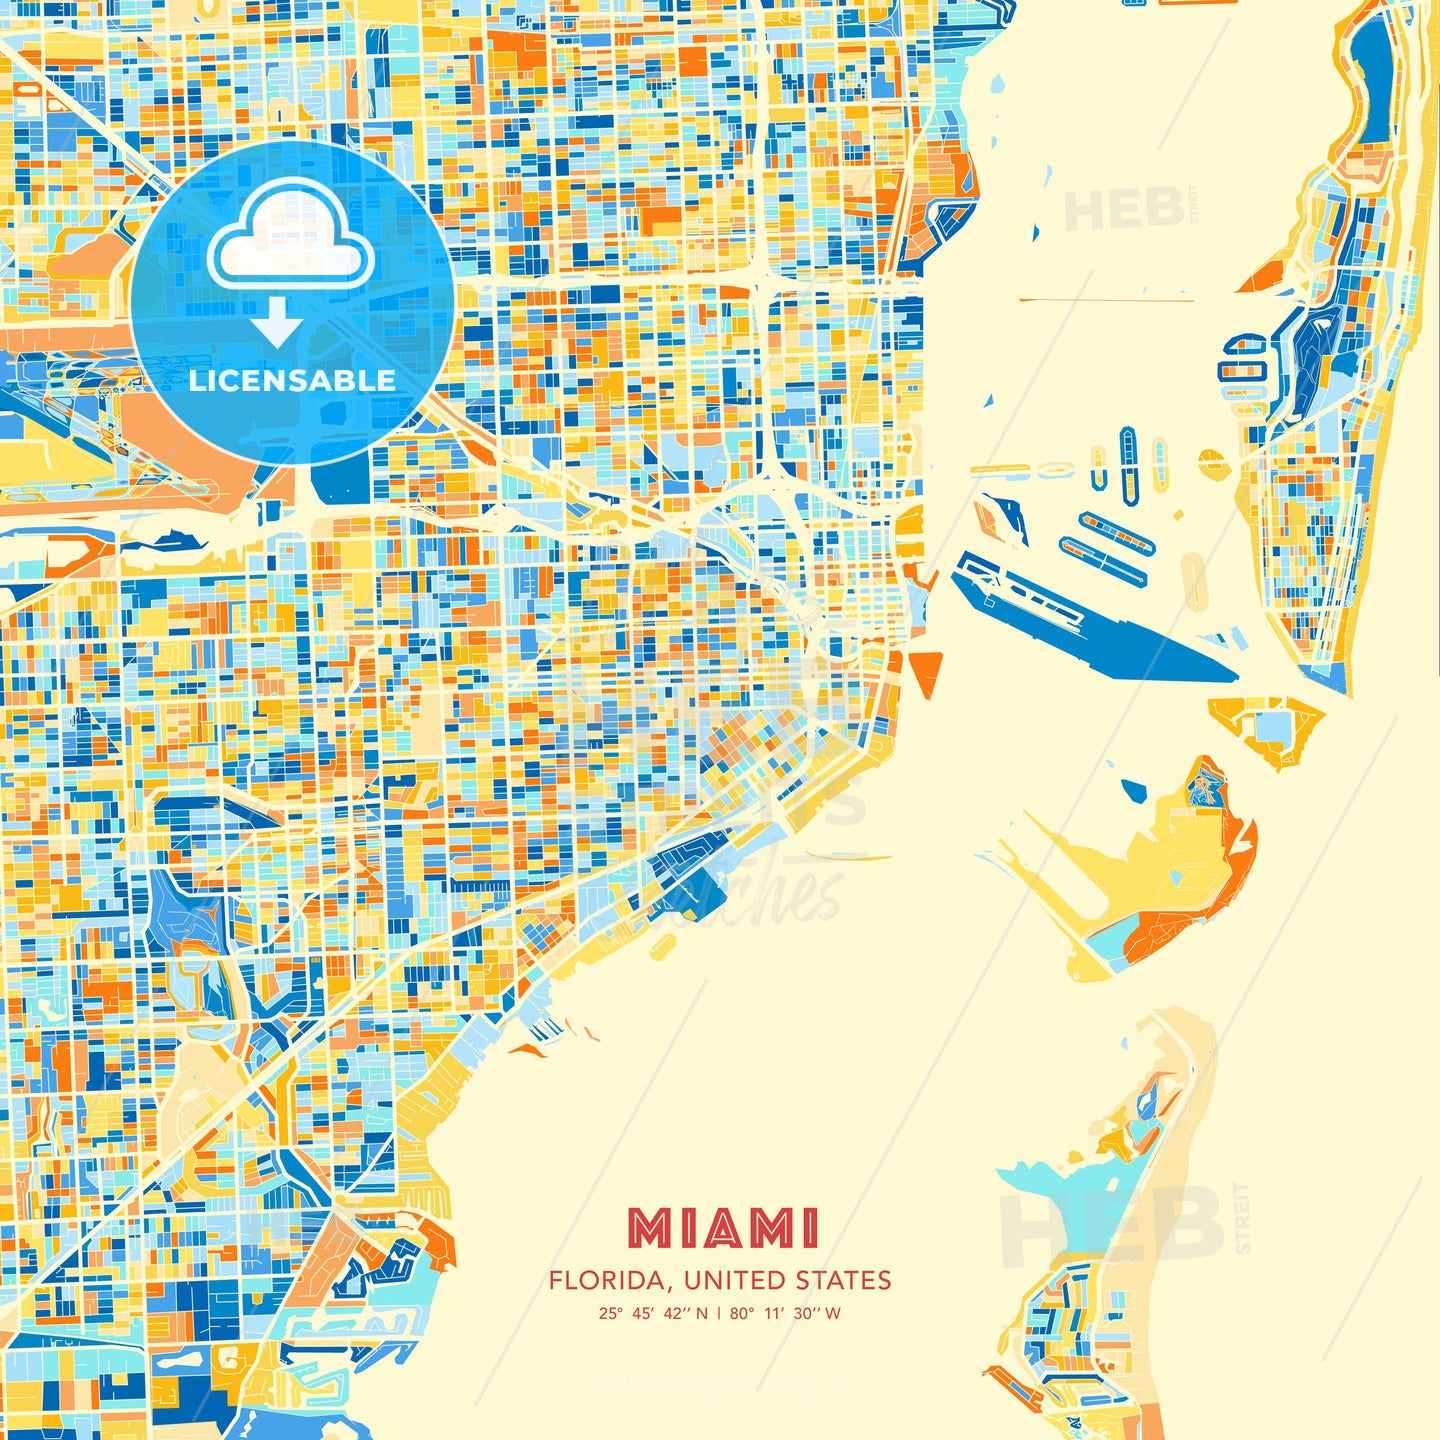 Miami, Florida, United States, map - HEBSTREITS Sketches